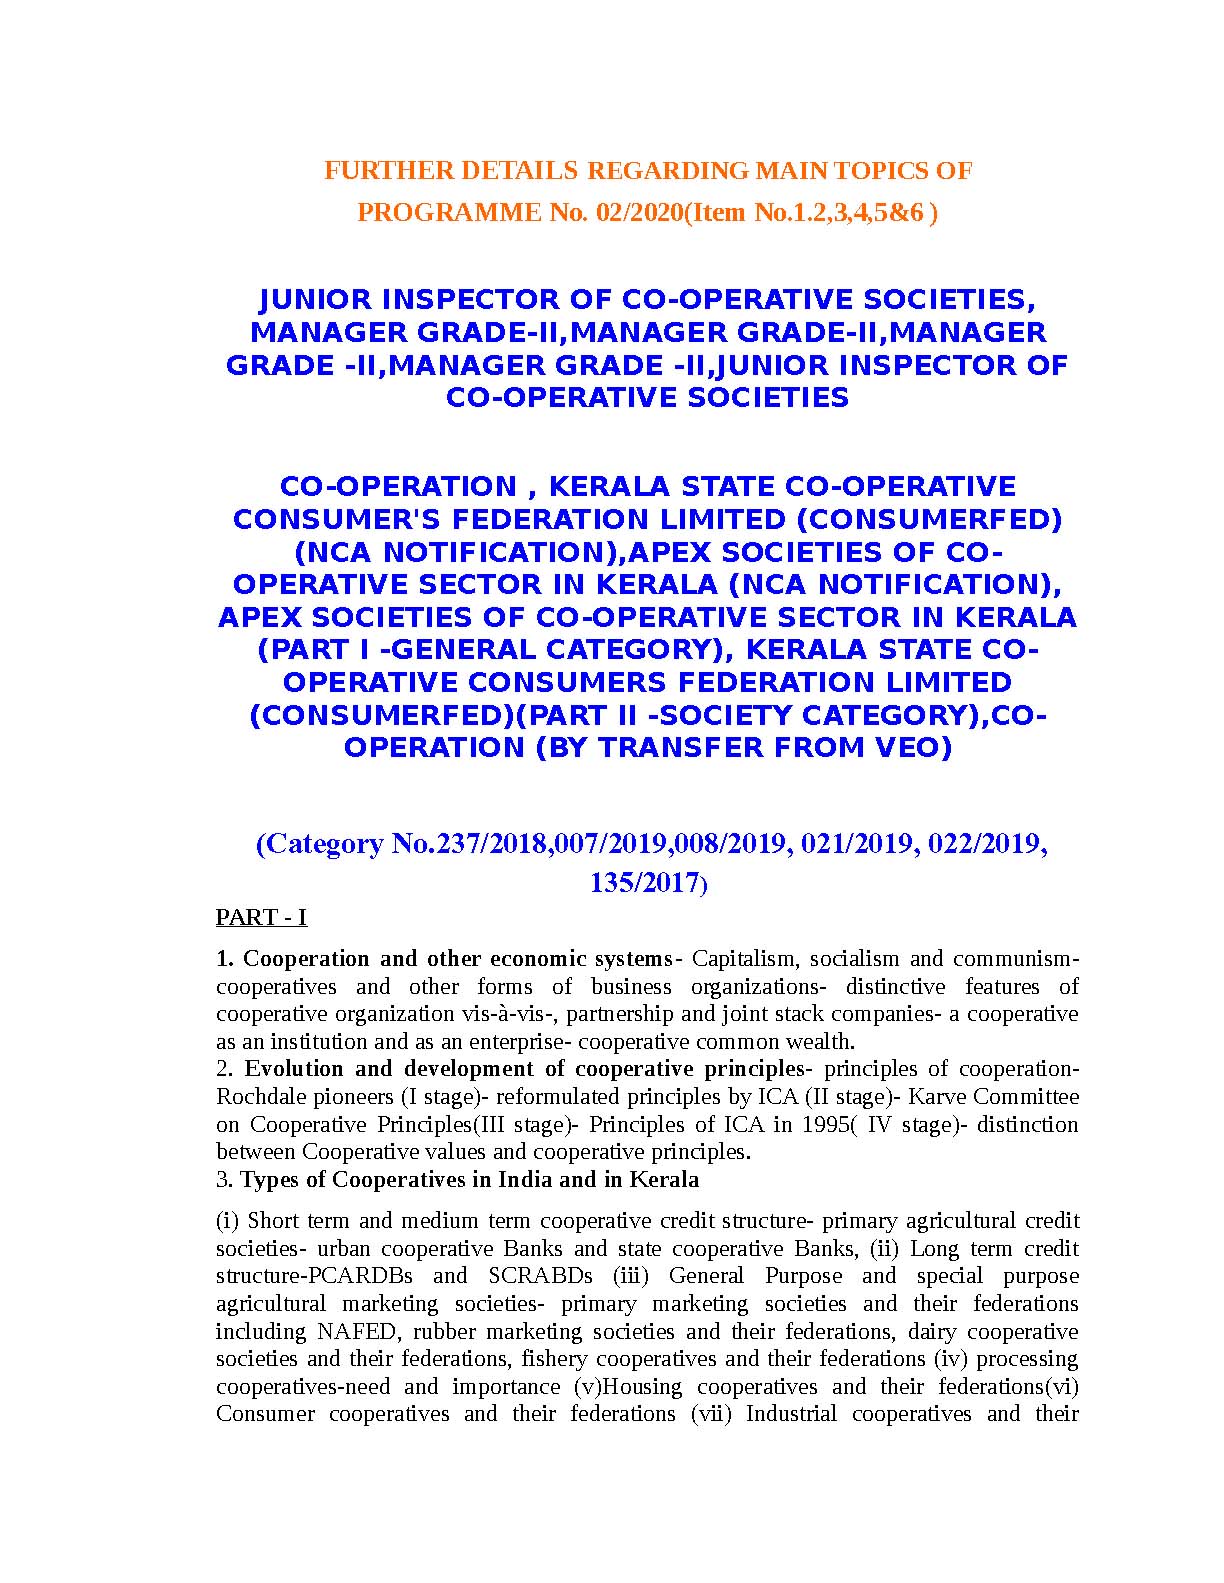 KPSC Junior Inspector Of Co Operative Societies Exam Syllabus - Notification Image 1